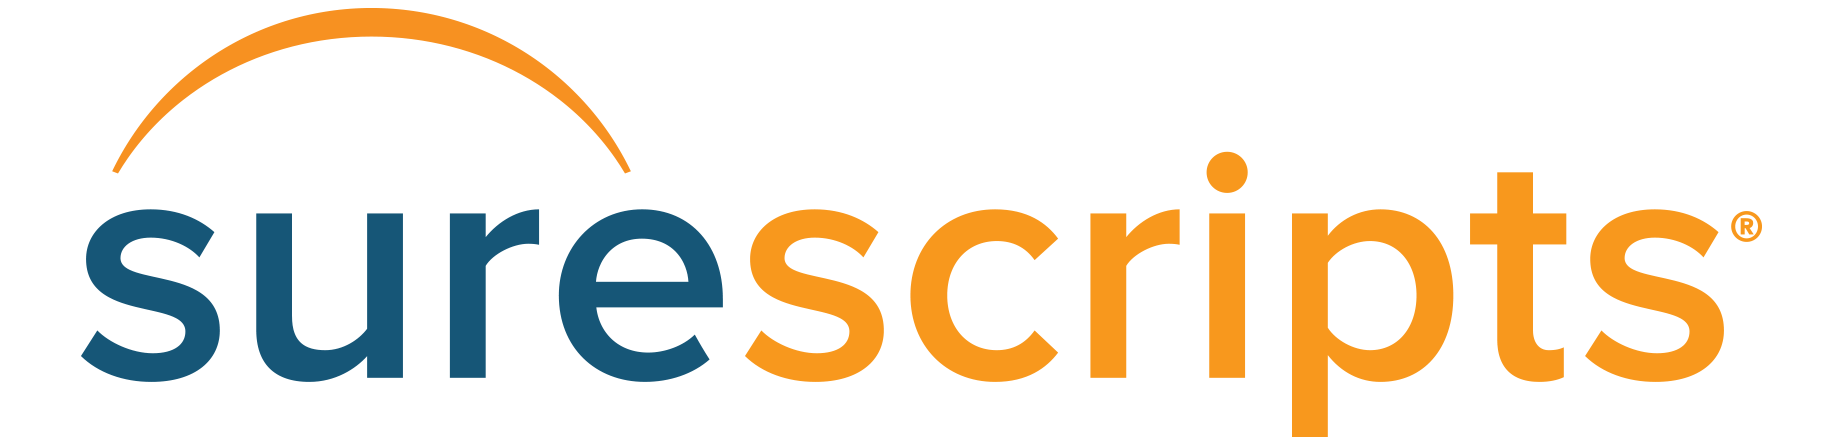 Surescripts Logo - Surescripts Competitors, Revenue and Employees - Owler Company Profile